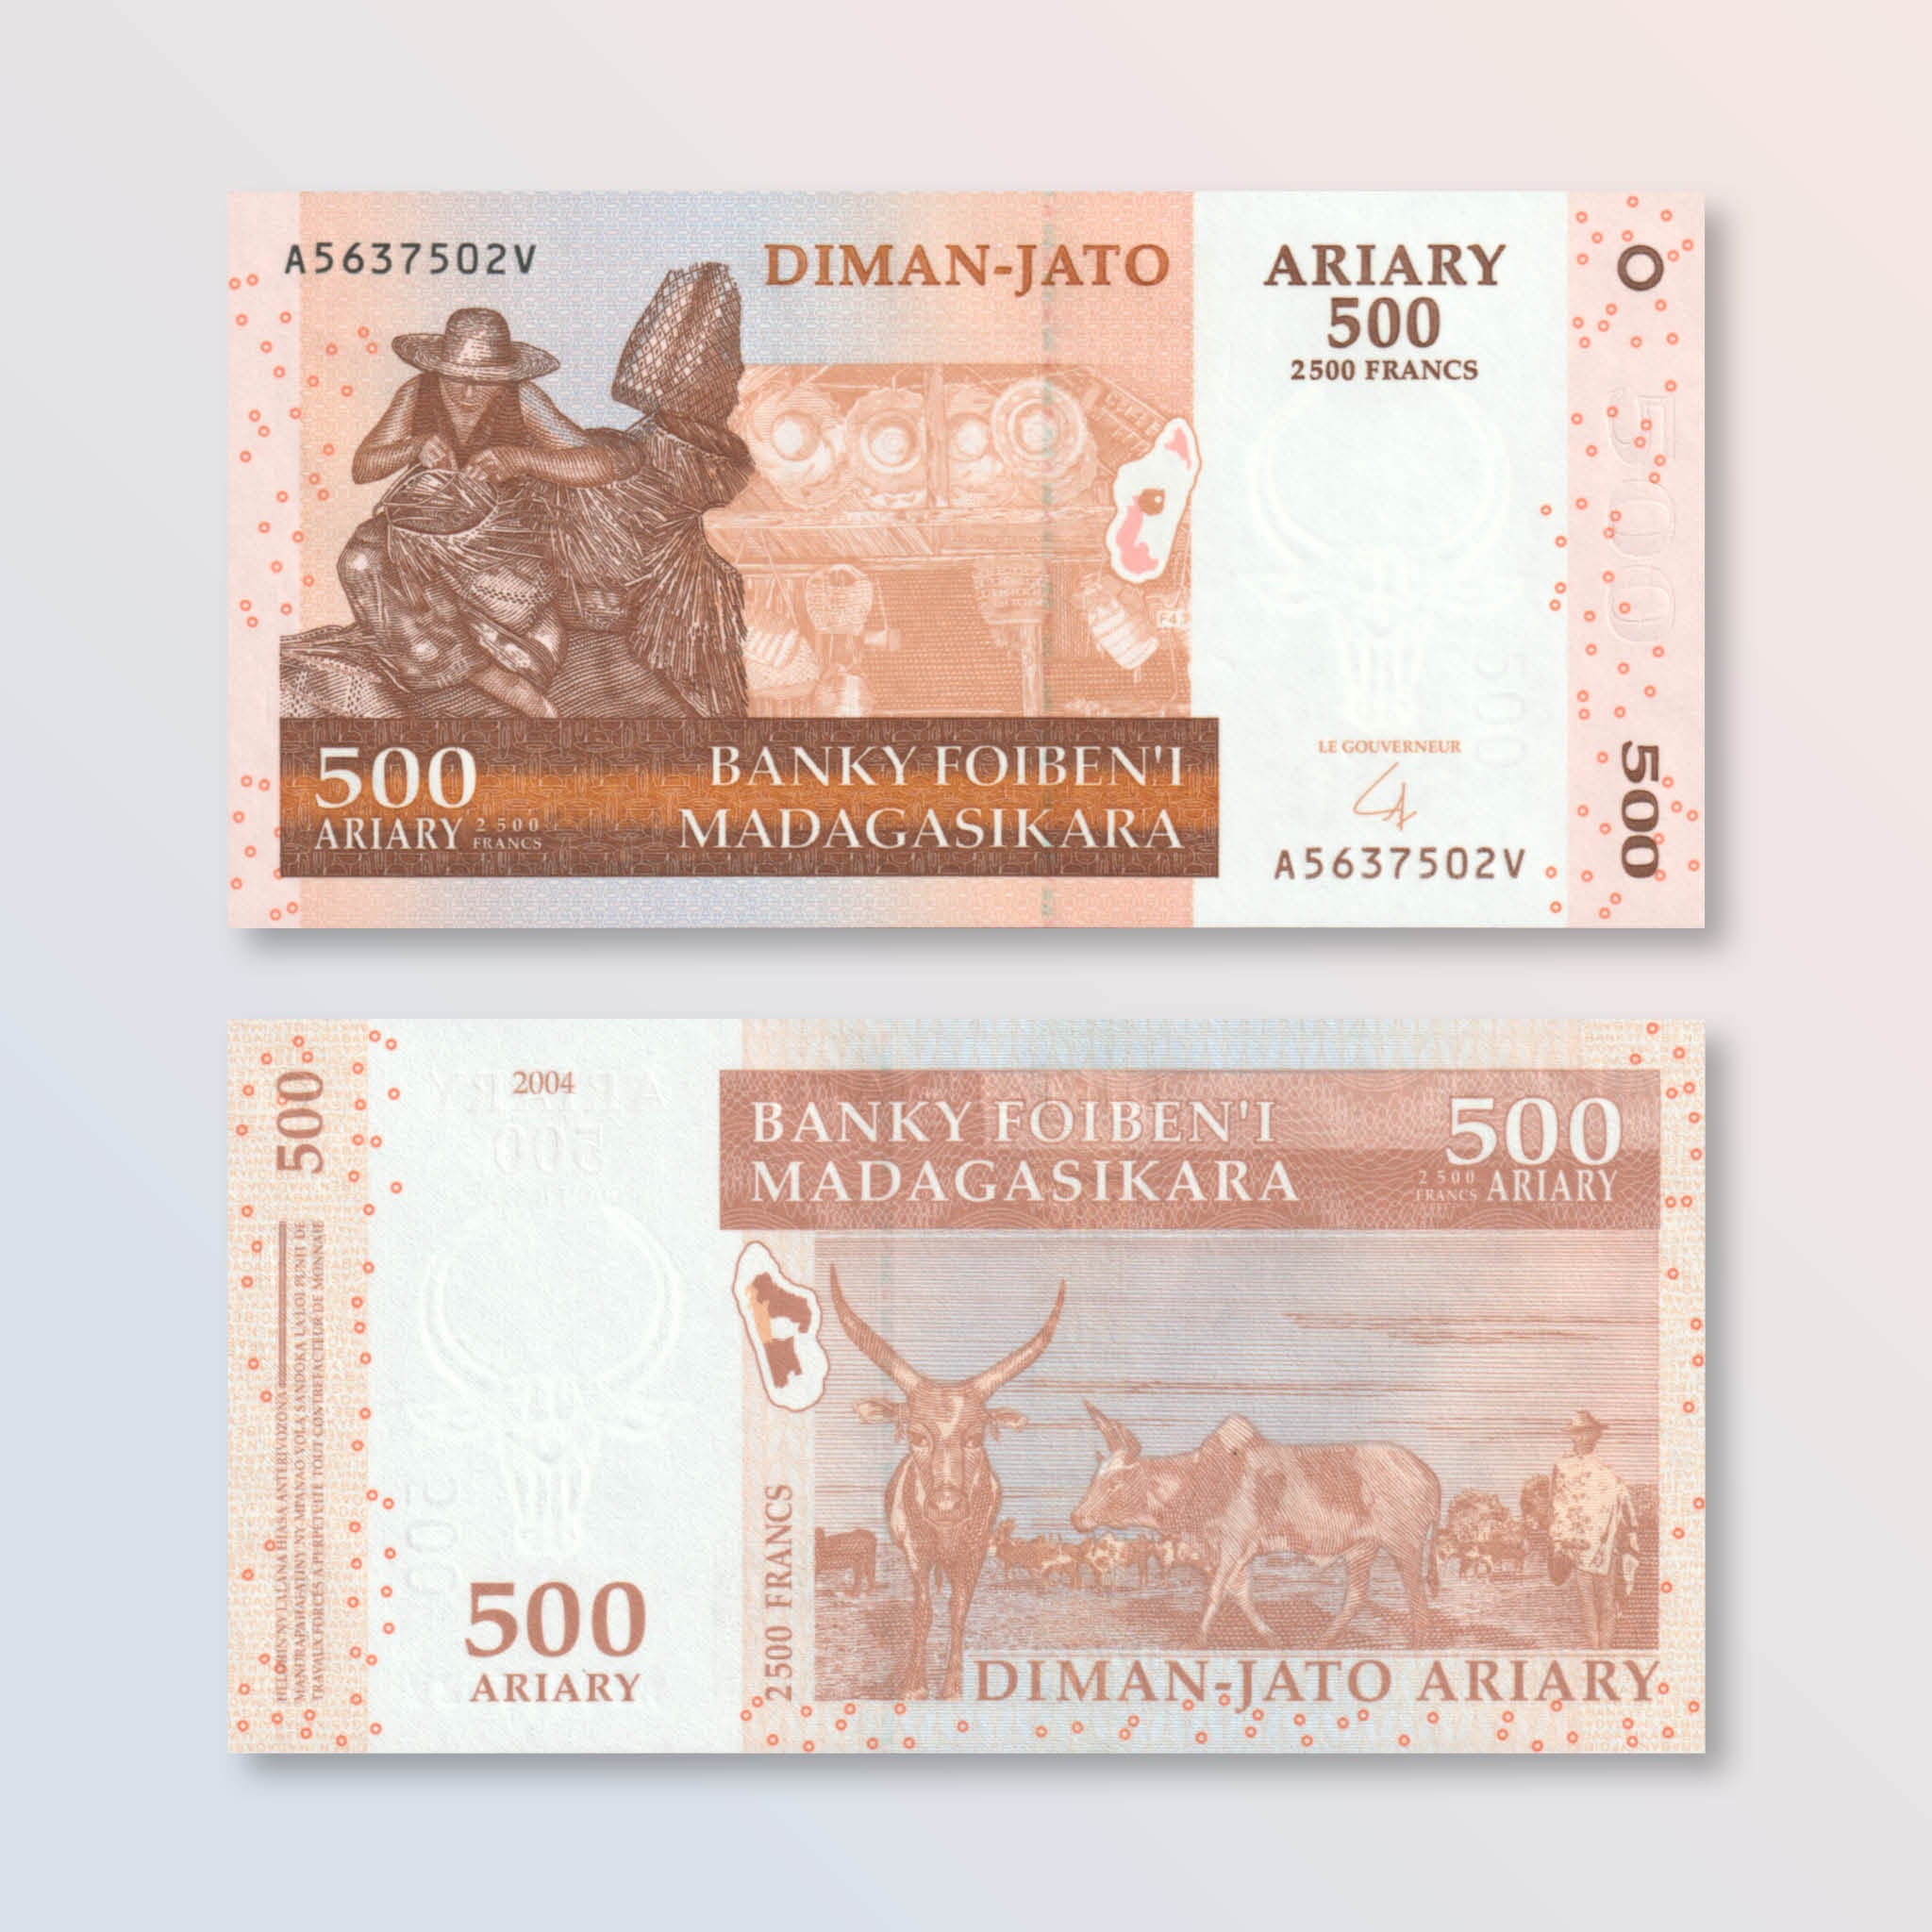 Madagascar 500 Ariary, 2004 (2014), B322c, P95a, UNC - Robert's World Money - World Banknotes